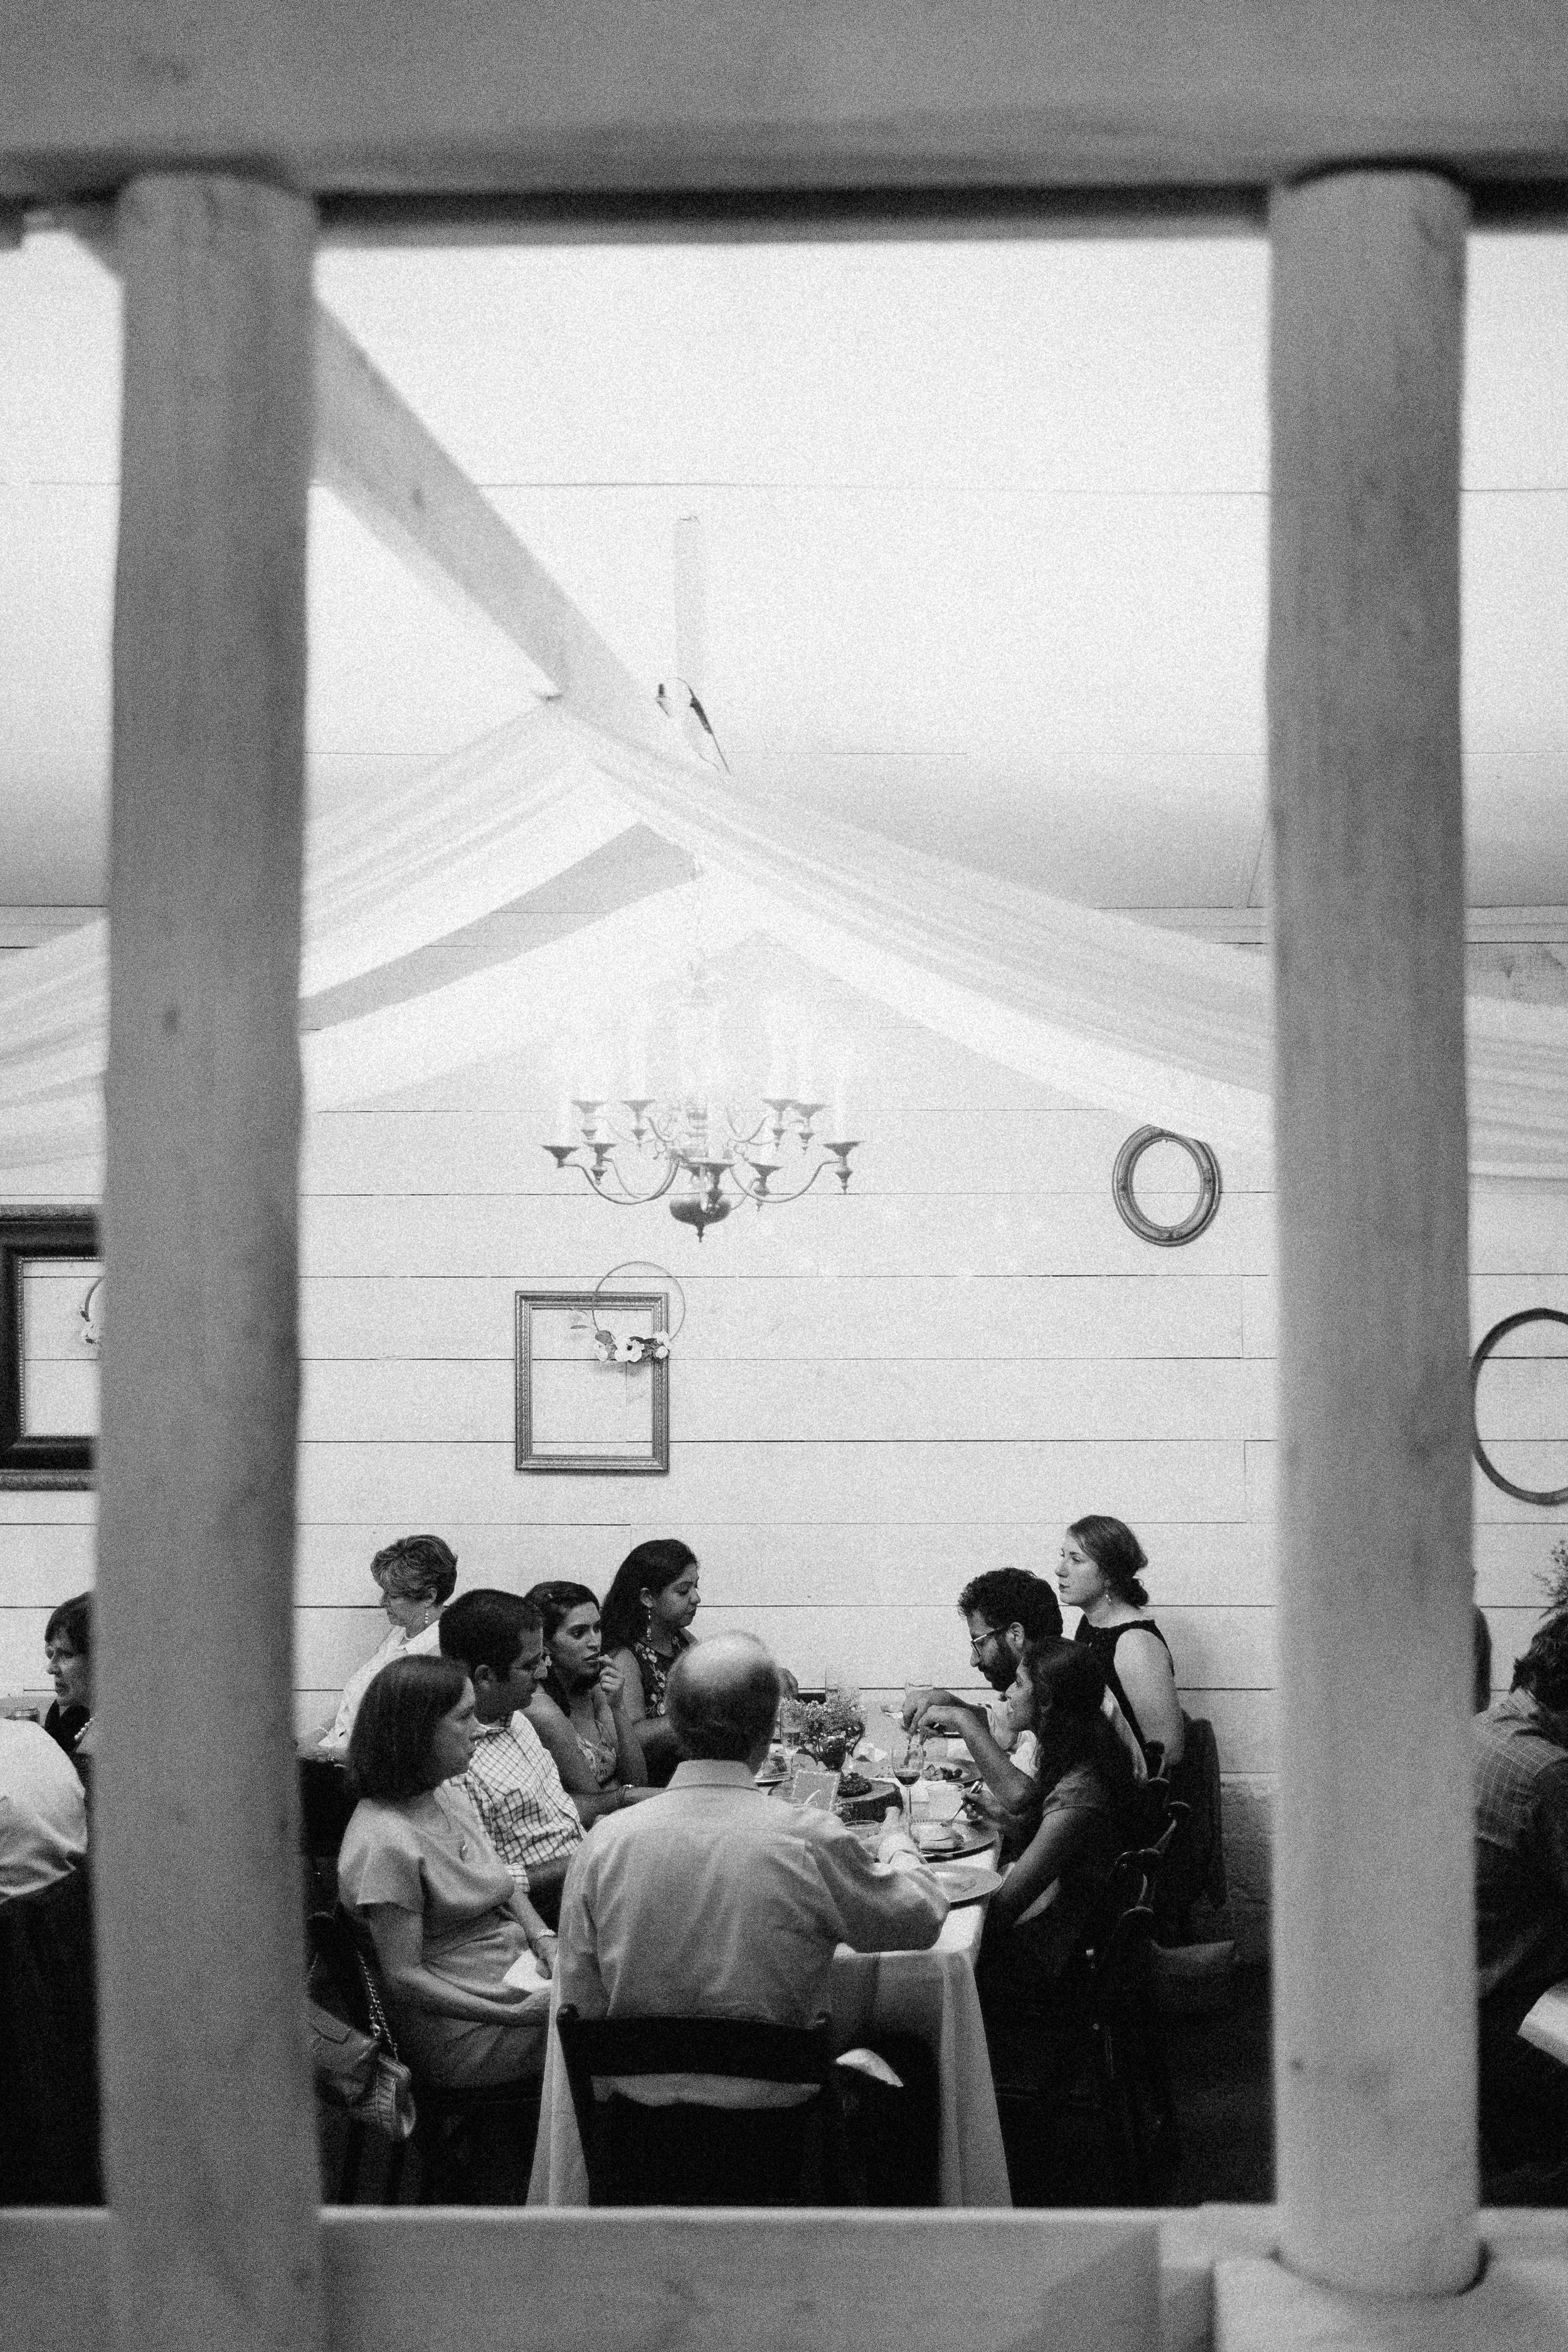 cleveland_georgia_mountain_laurel_farm_natural_classic_timeless_documentary_candid_wedding_emotional_photojournalism_river_west_1985.jpg